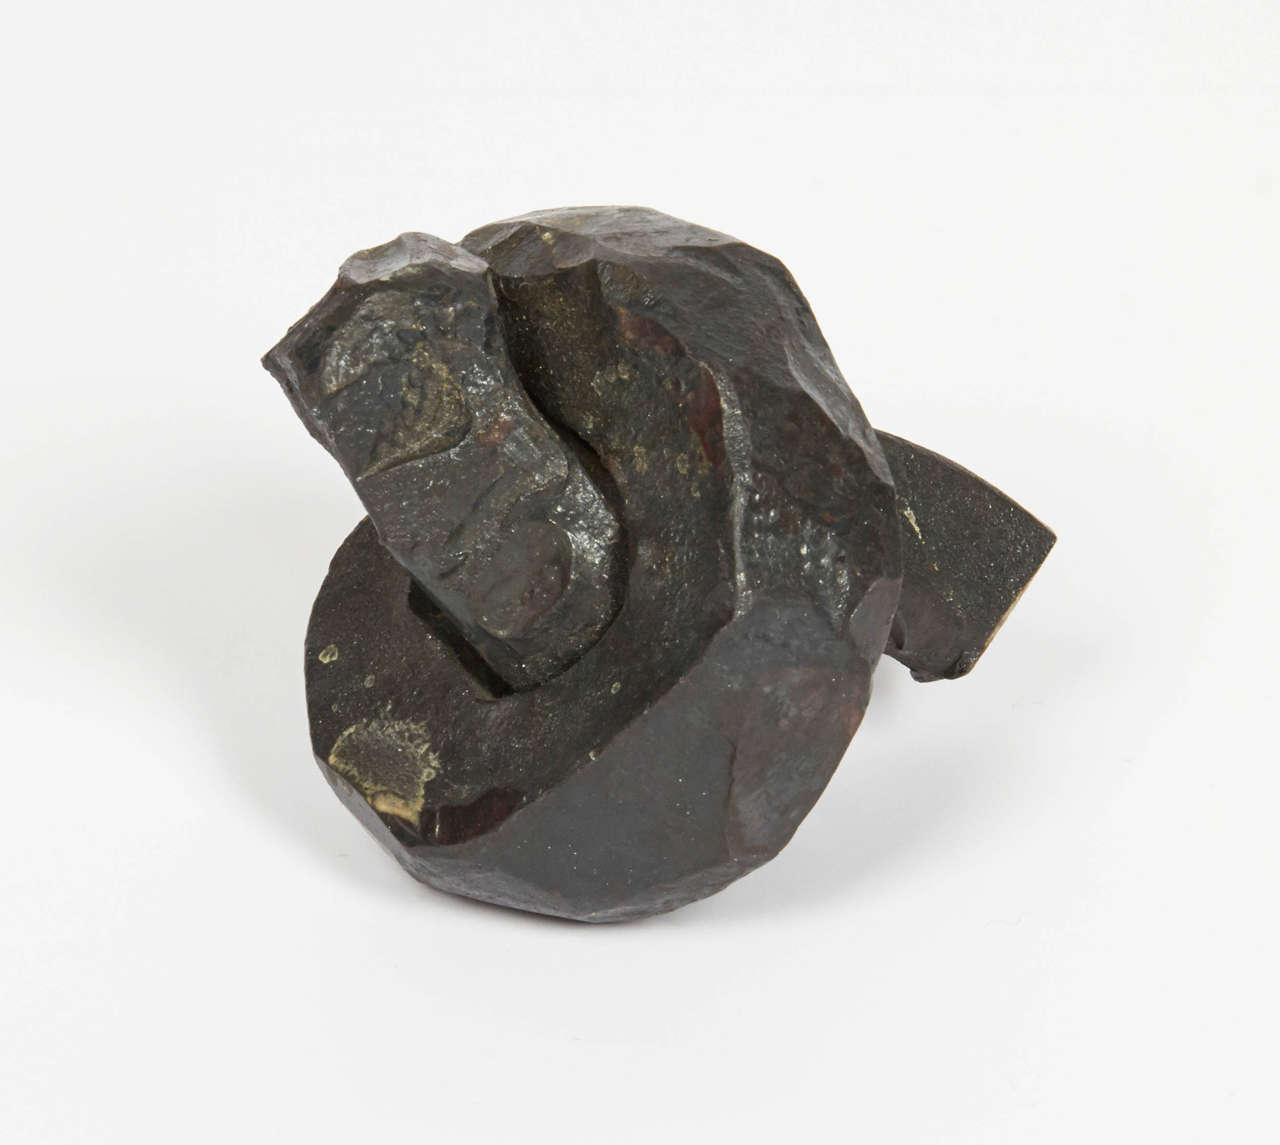 Small bronze sculpture attributed to Eduardo Chillida.